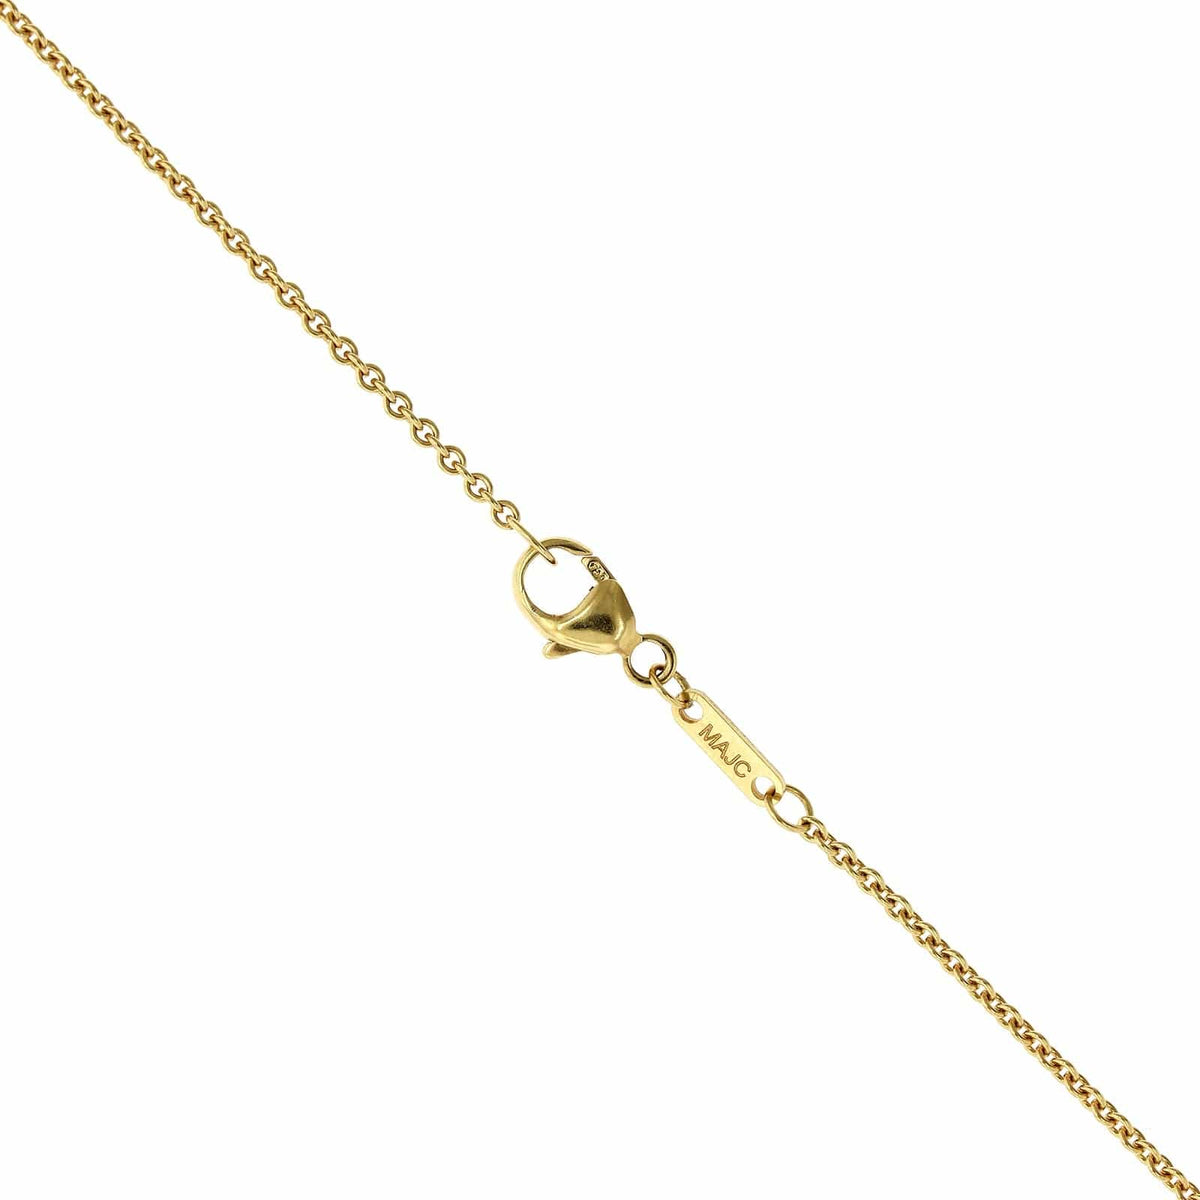 18K Yellow Gold Ruby and Diamond Halo Pendant, Long's Jewelers